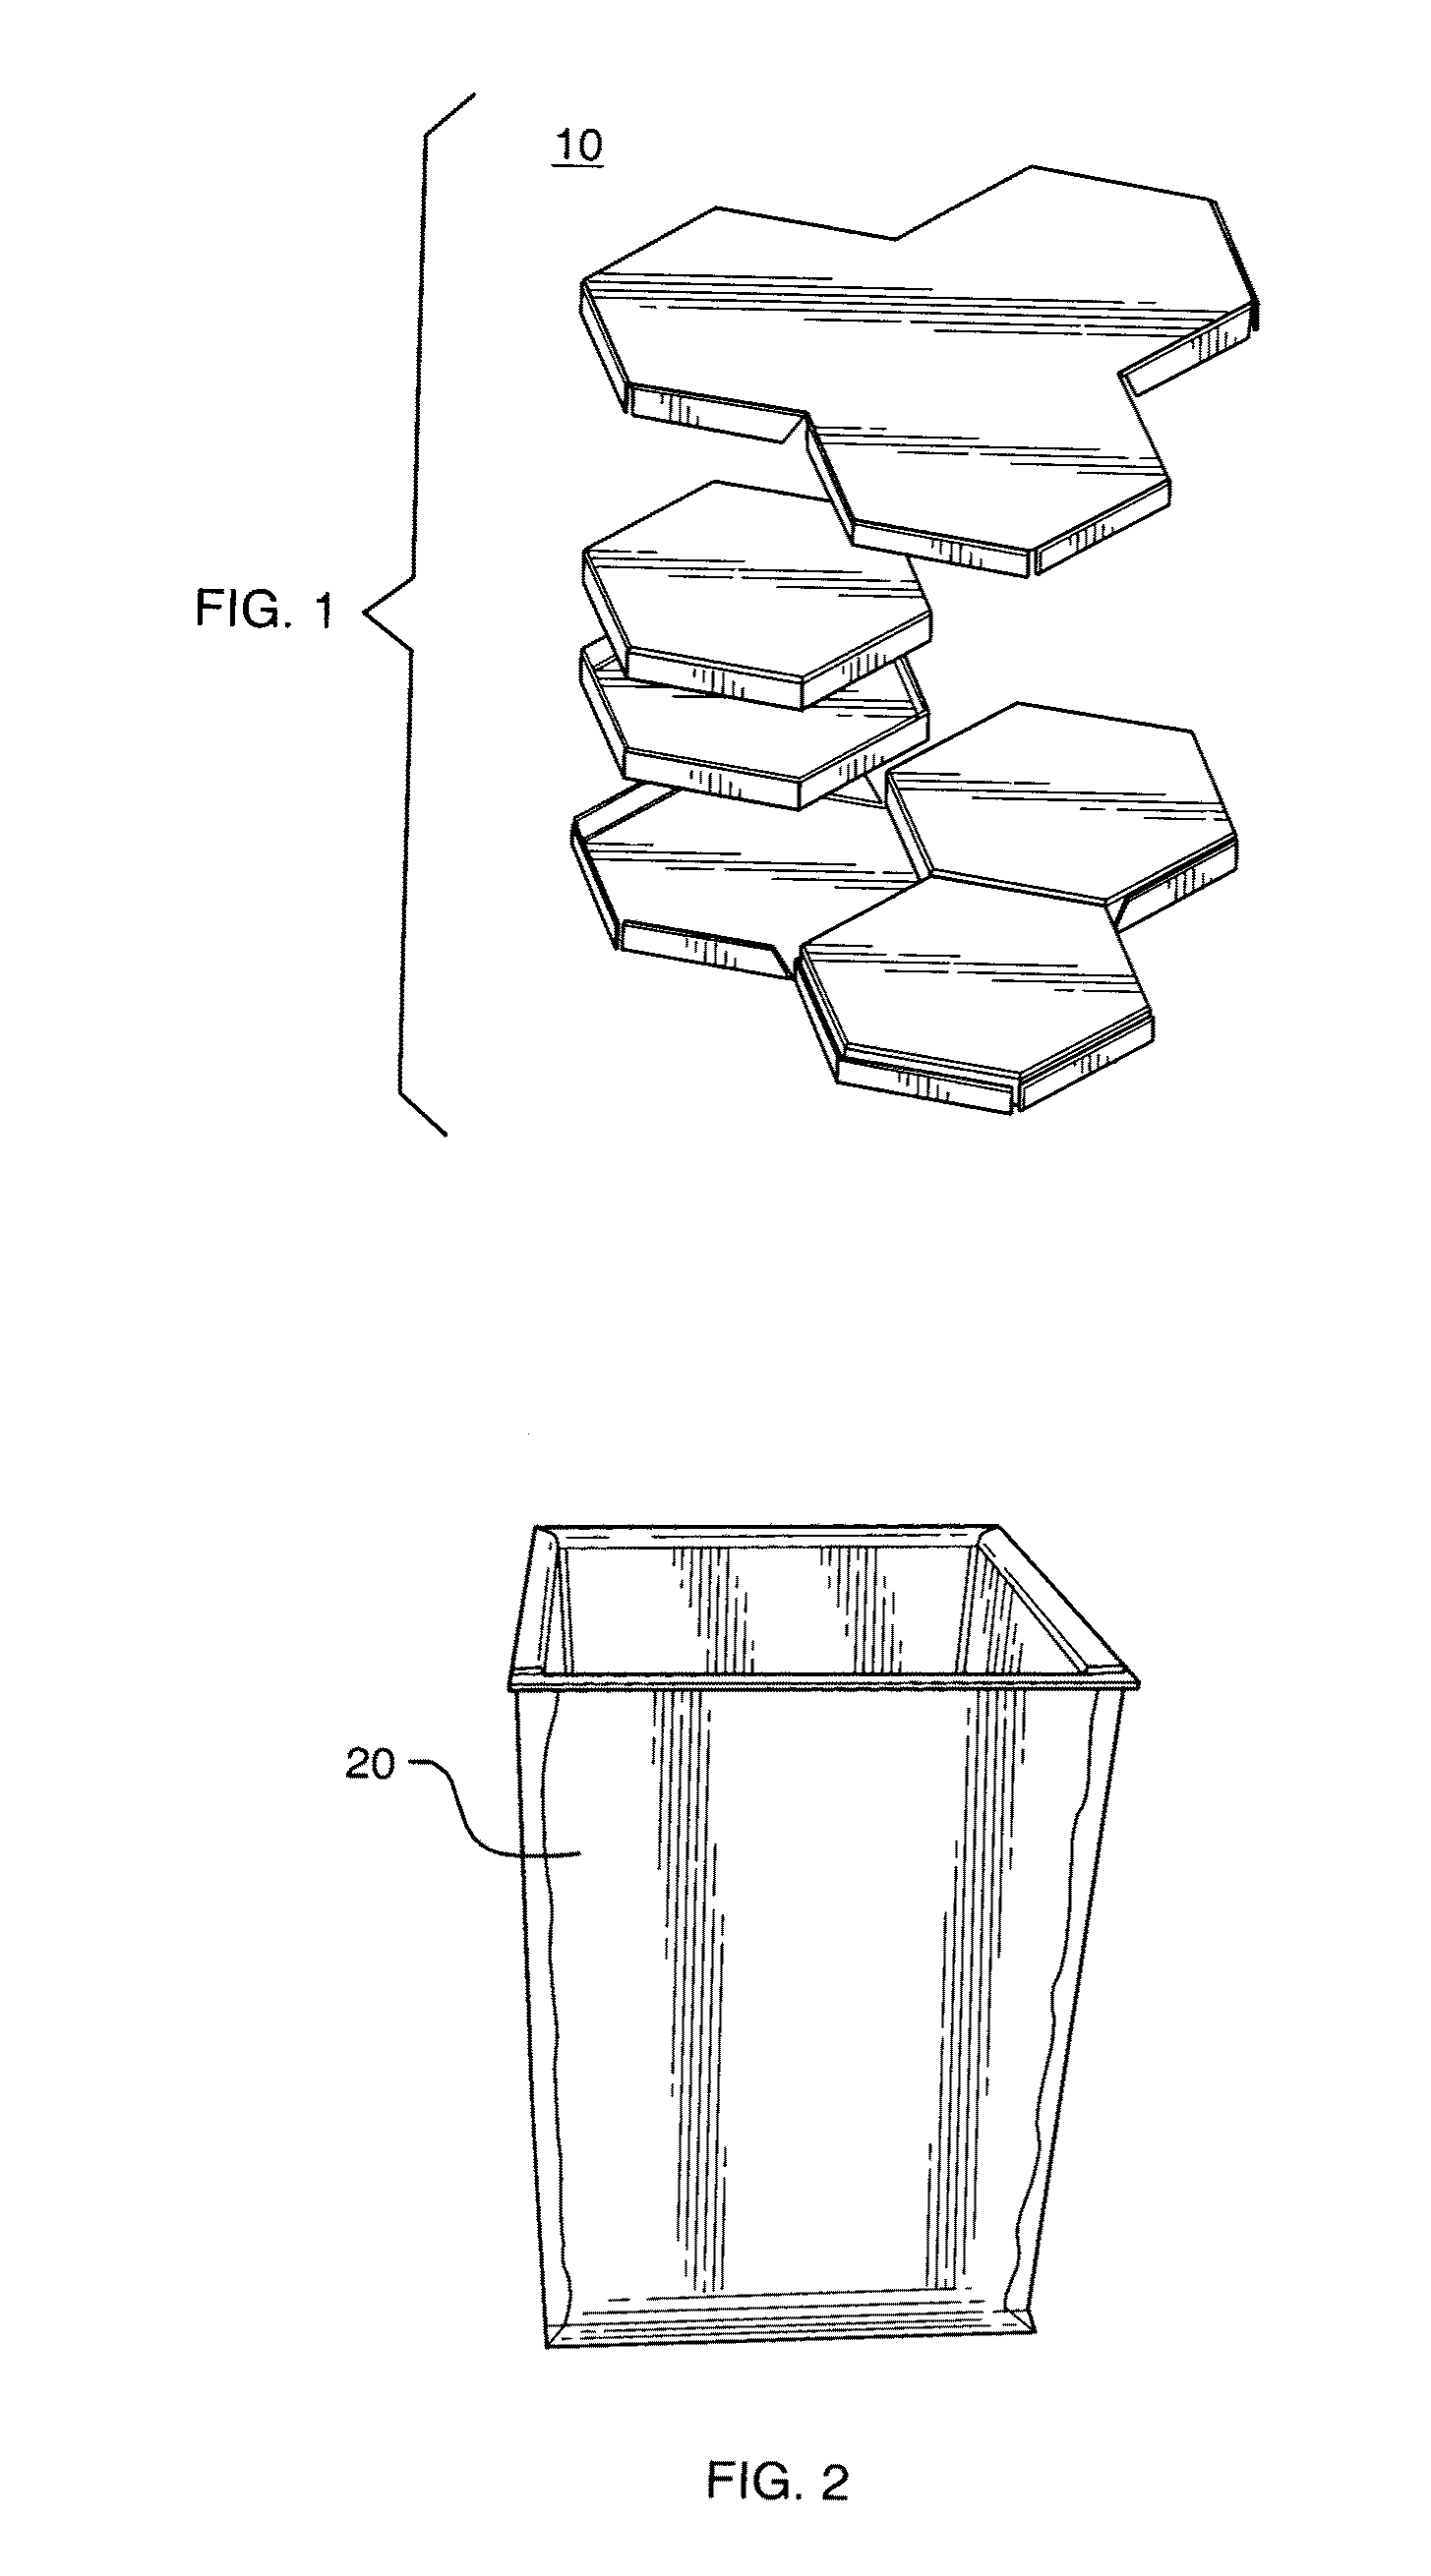 Method for producing armor through metallic encapsulation of a ceramic core